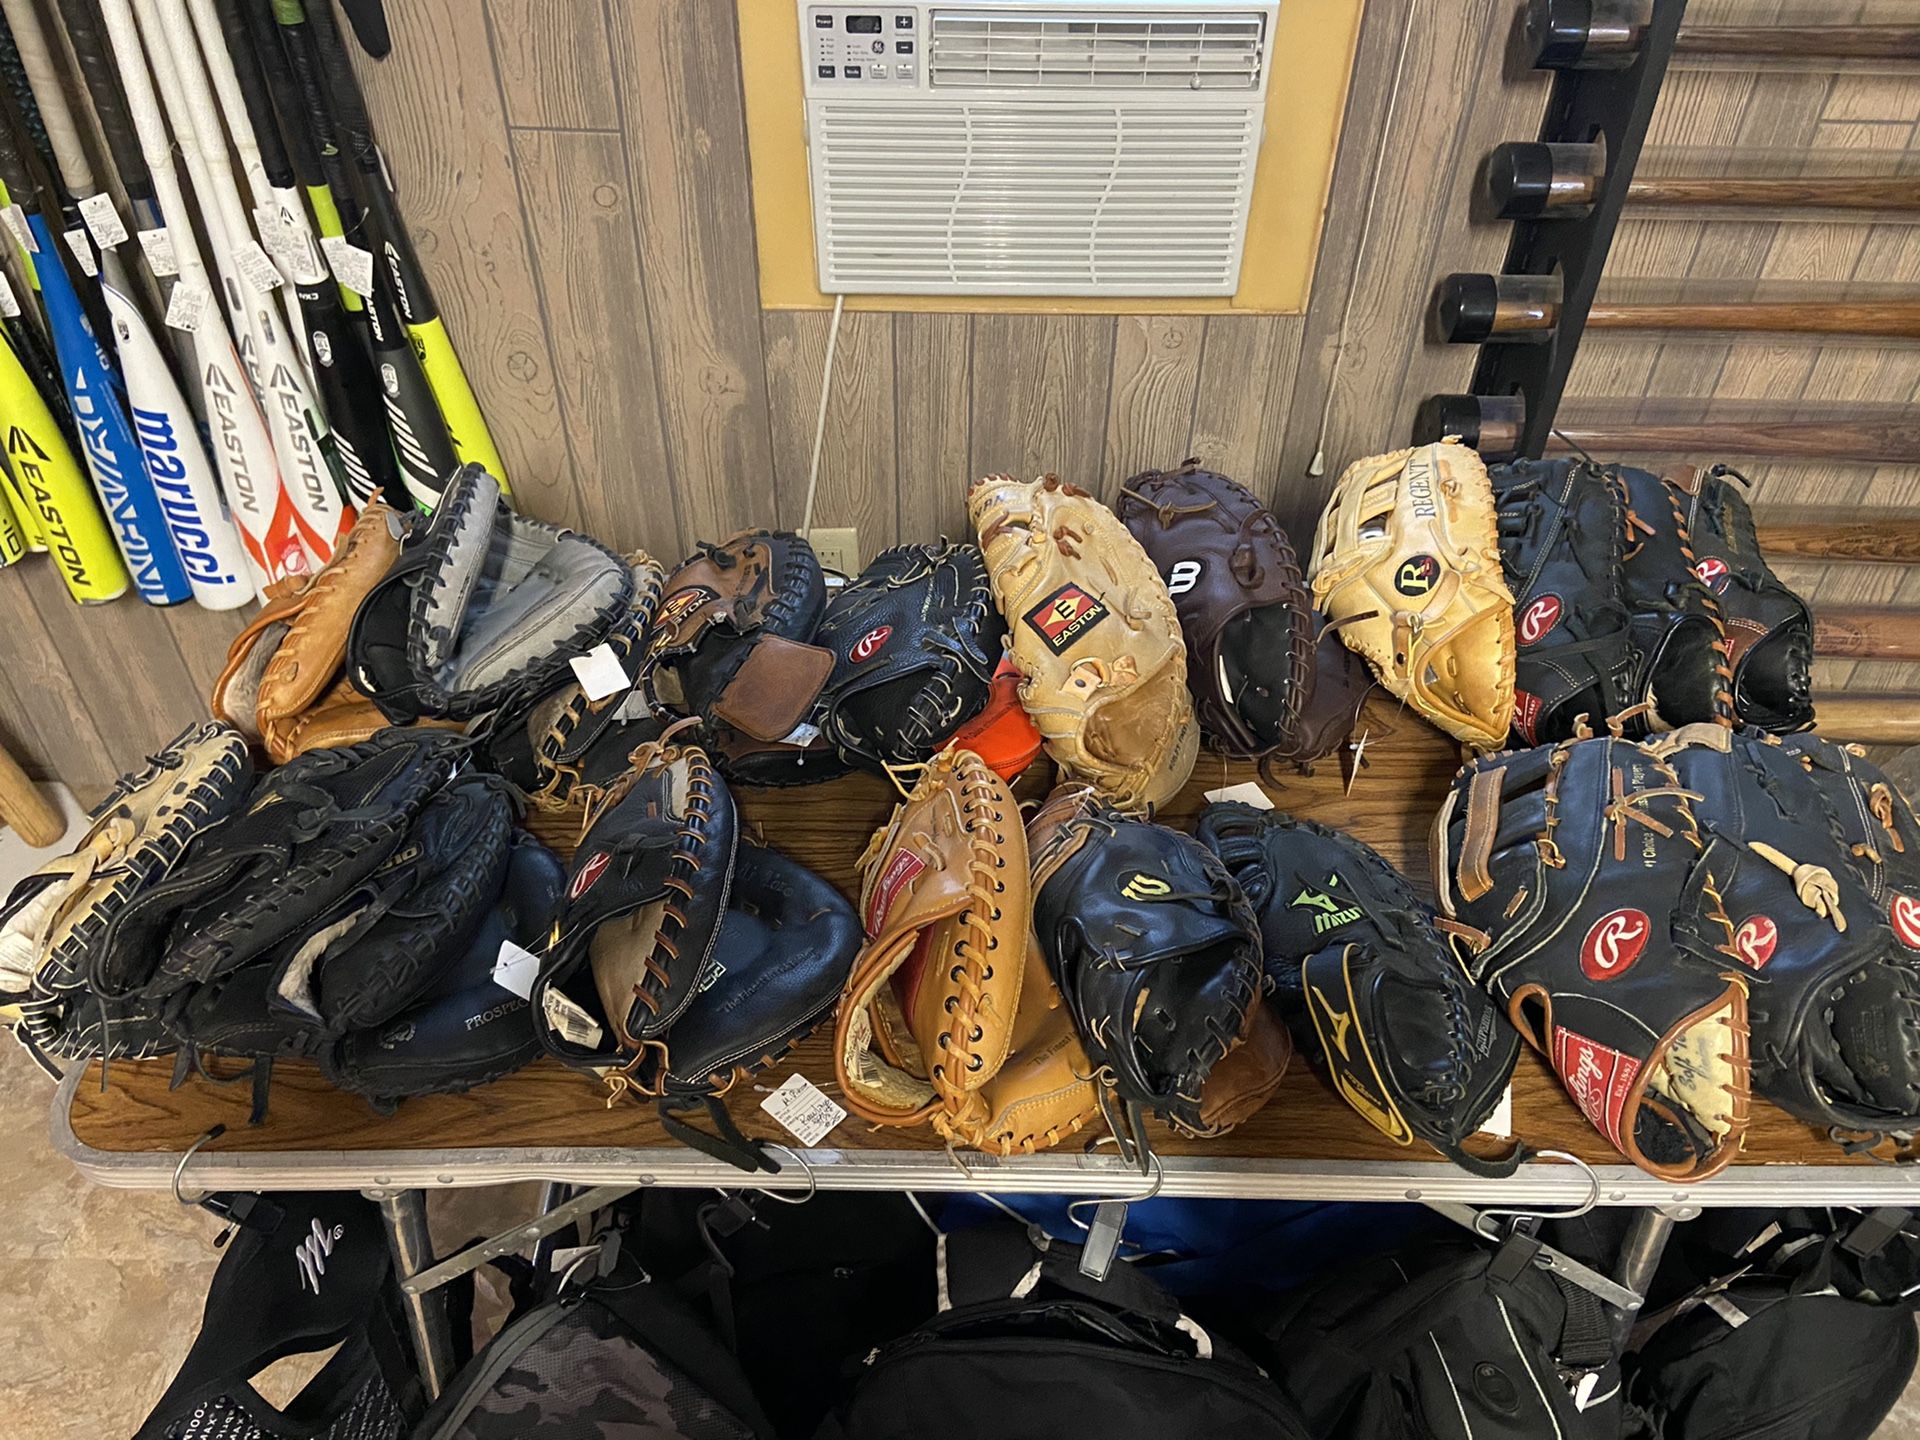 Baseball Catcher mitts - All sizes